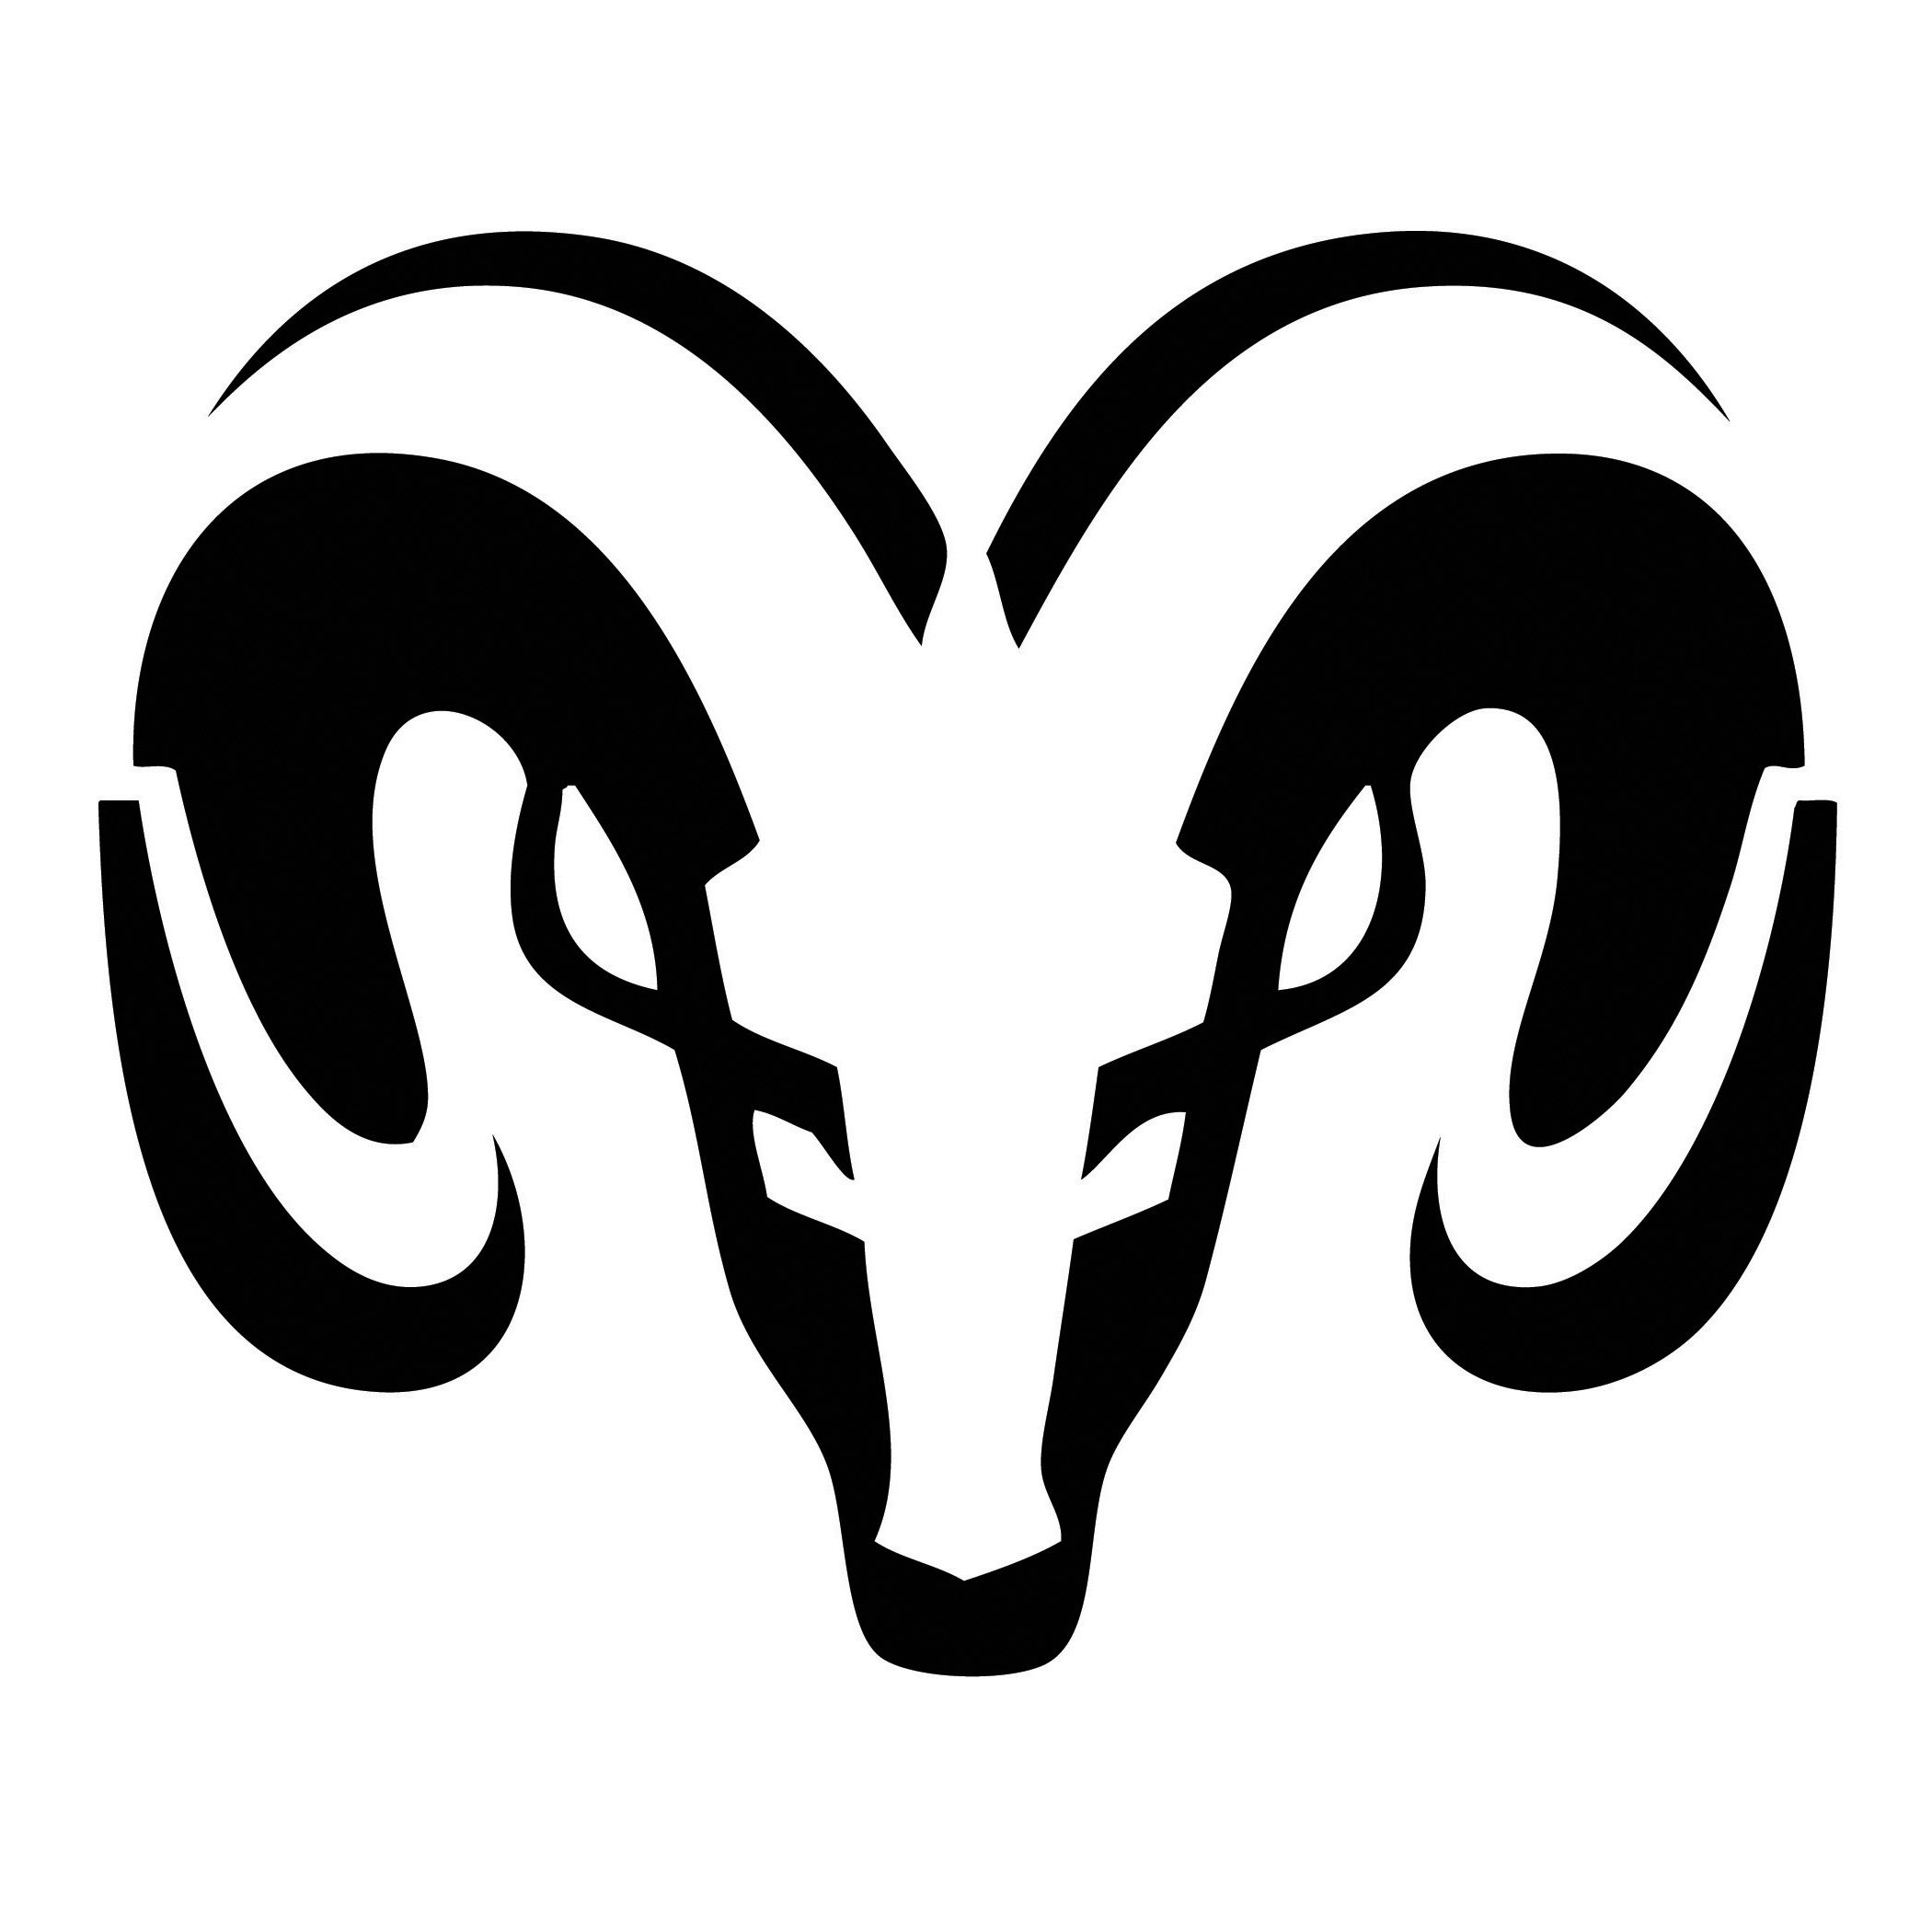 Free download Dodge Ram Logo Vector 2100 x 2100 is listed in our Dodge Ram [2100x2100] for your Desktop, Mobile & Tablet. Explore Dodge Ram Logo Wallpaper